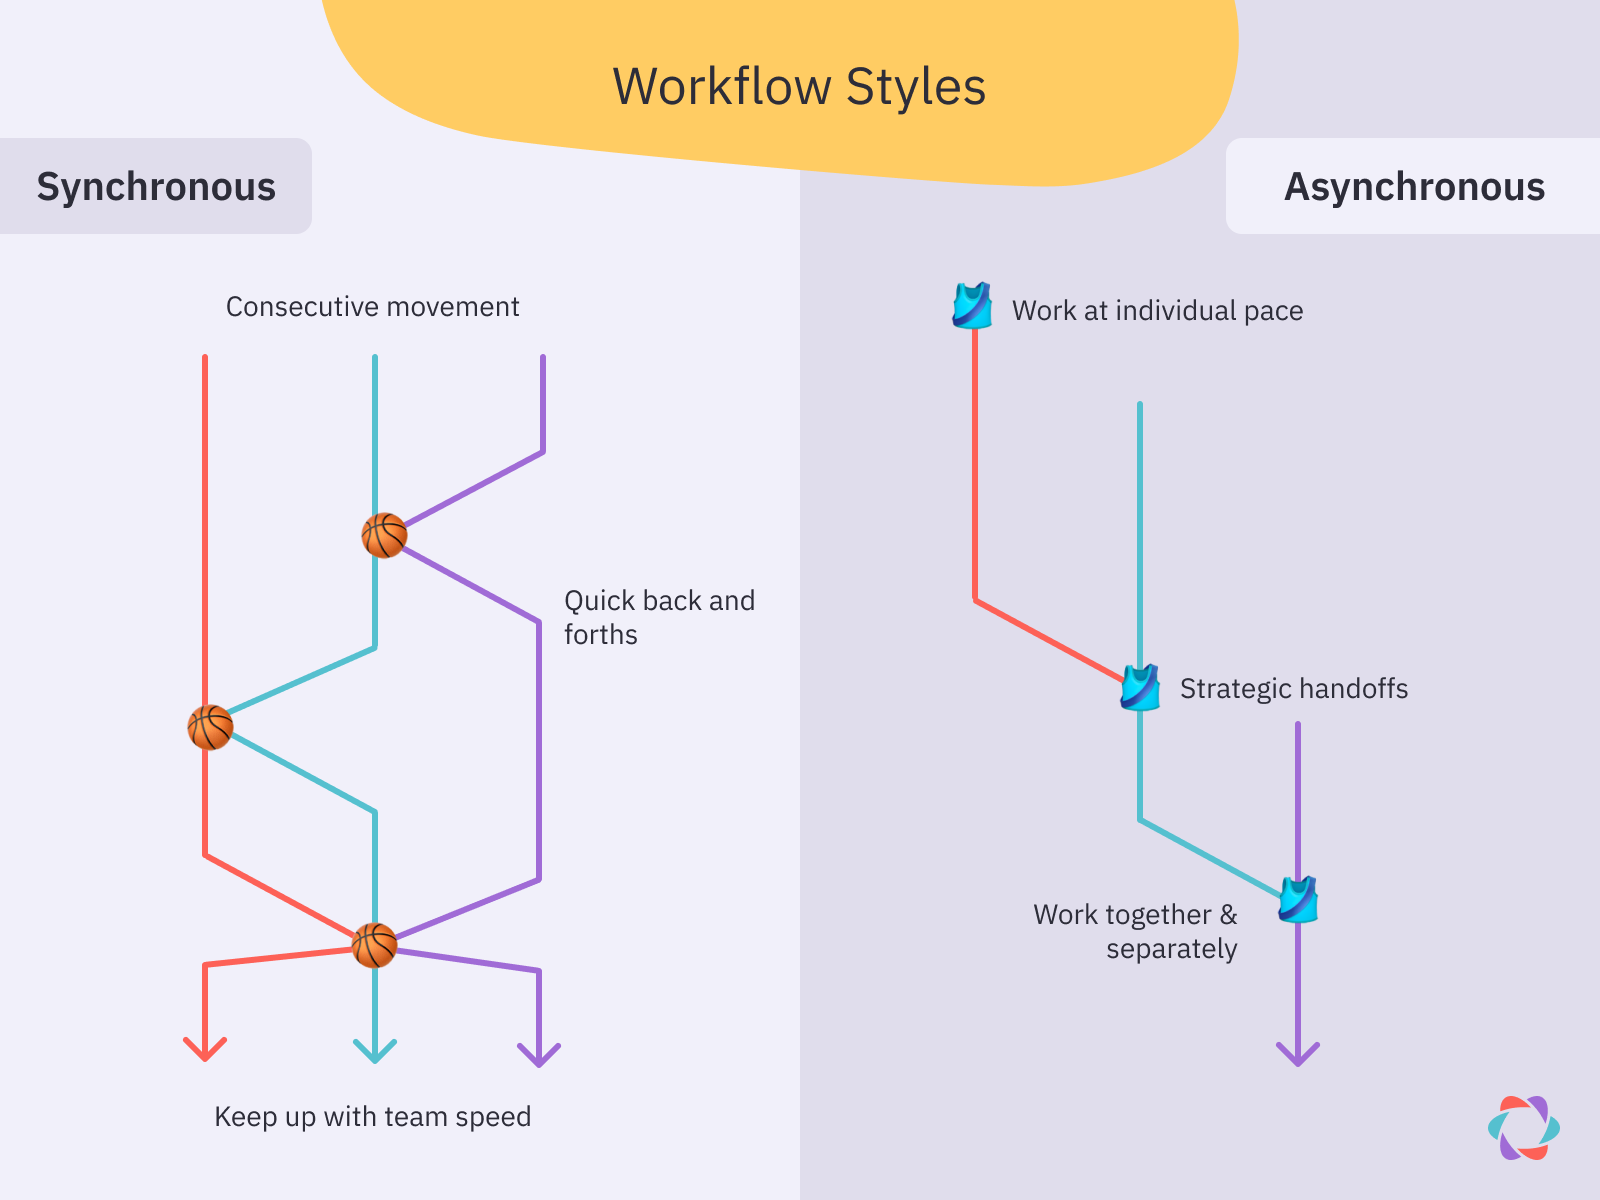 Sync vs Async Workstyles 